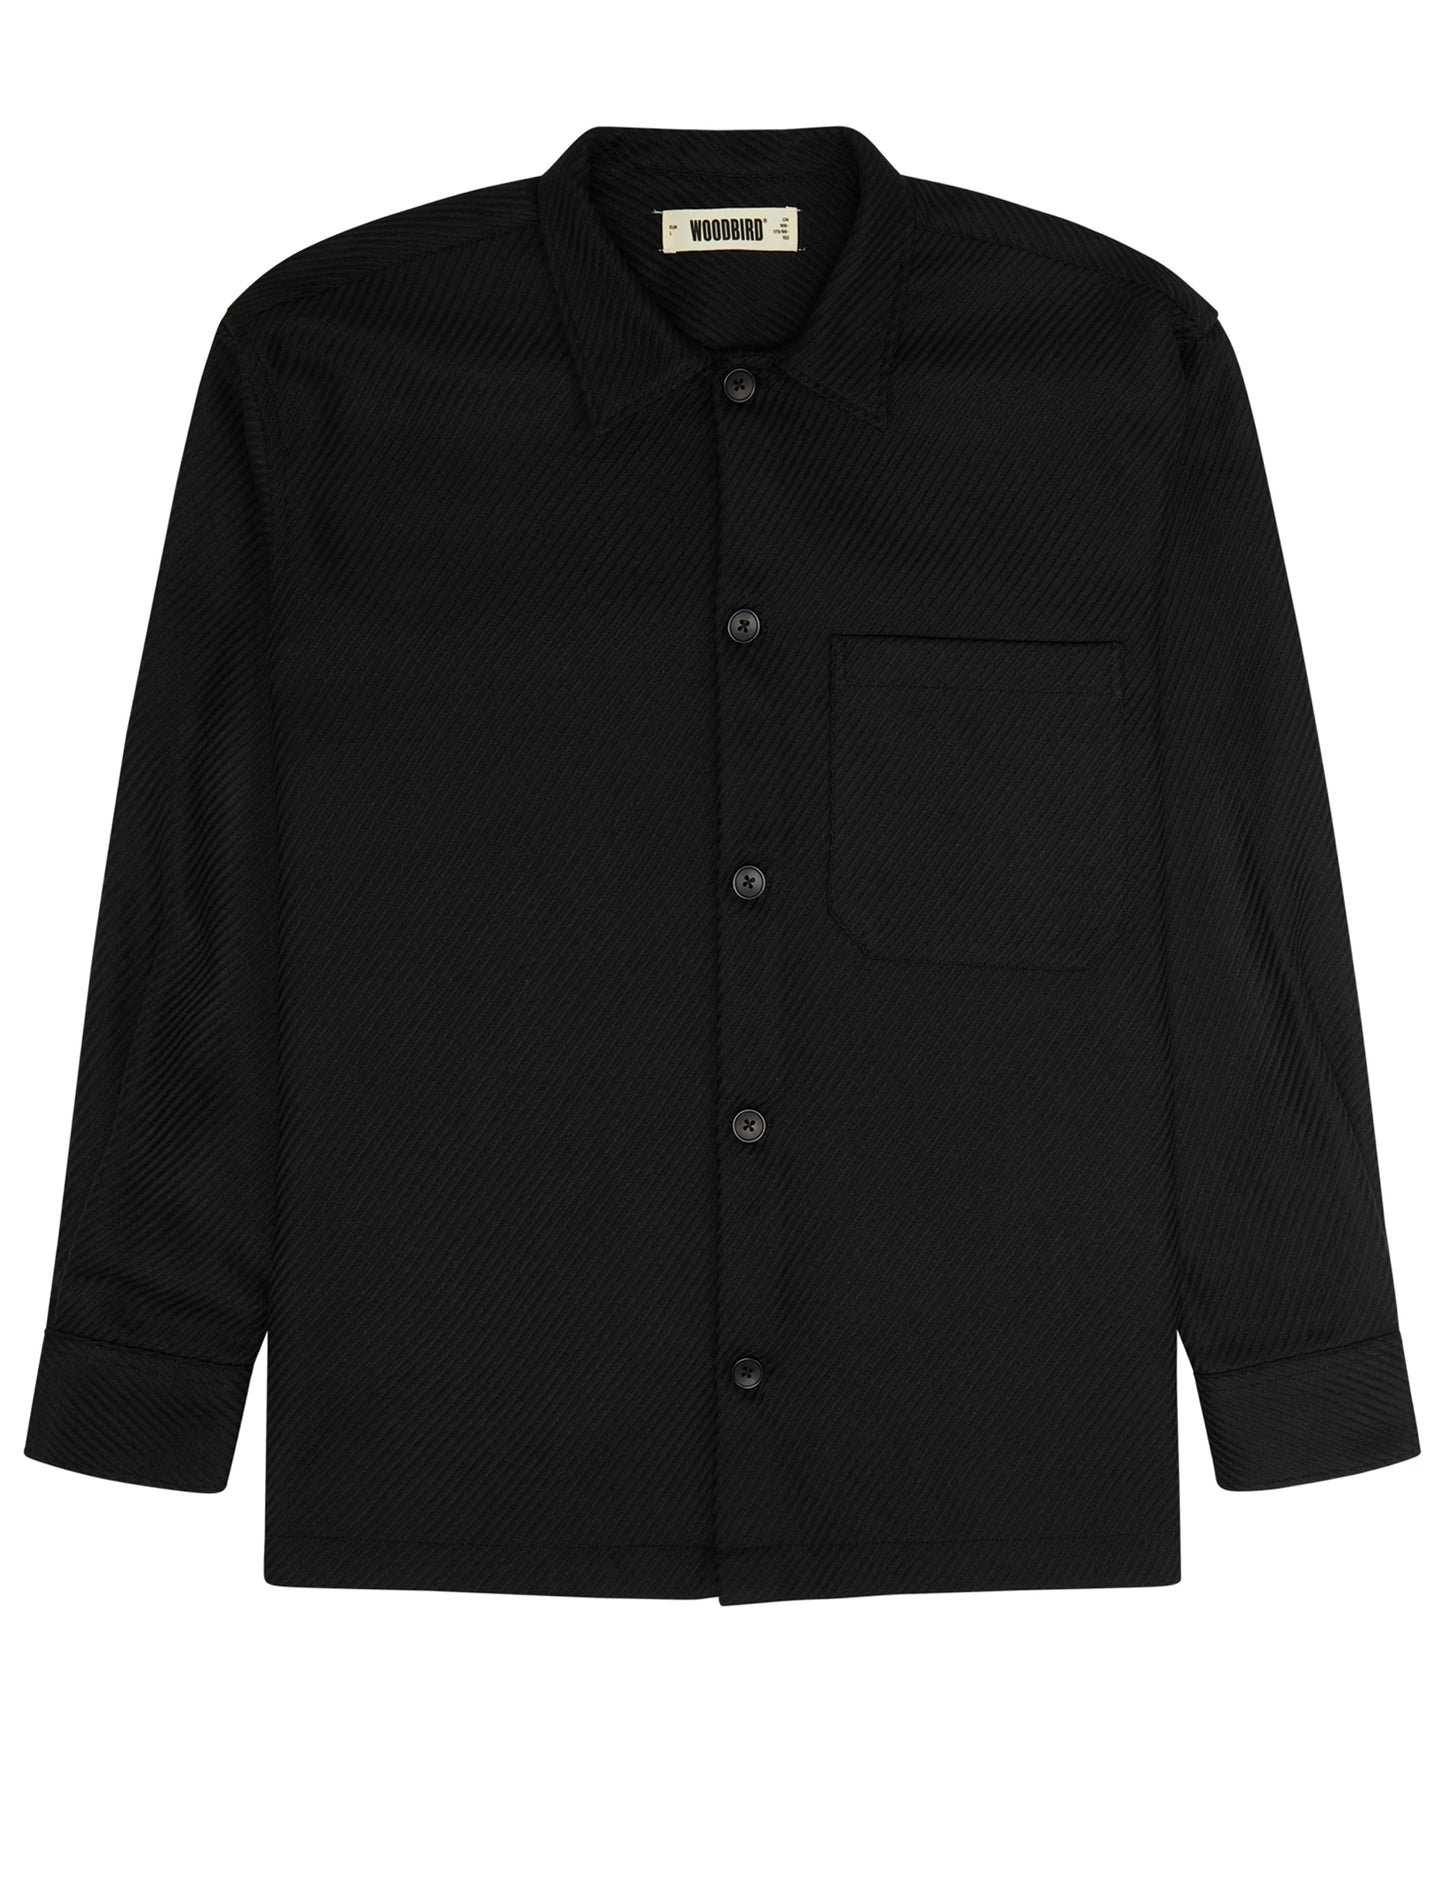 Woodbird - Tuck Twill Shirt - Black